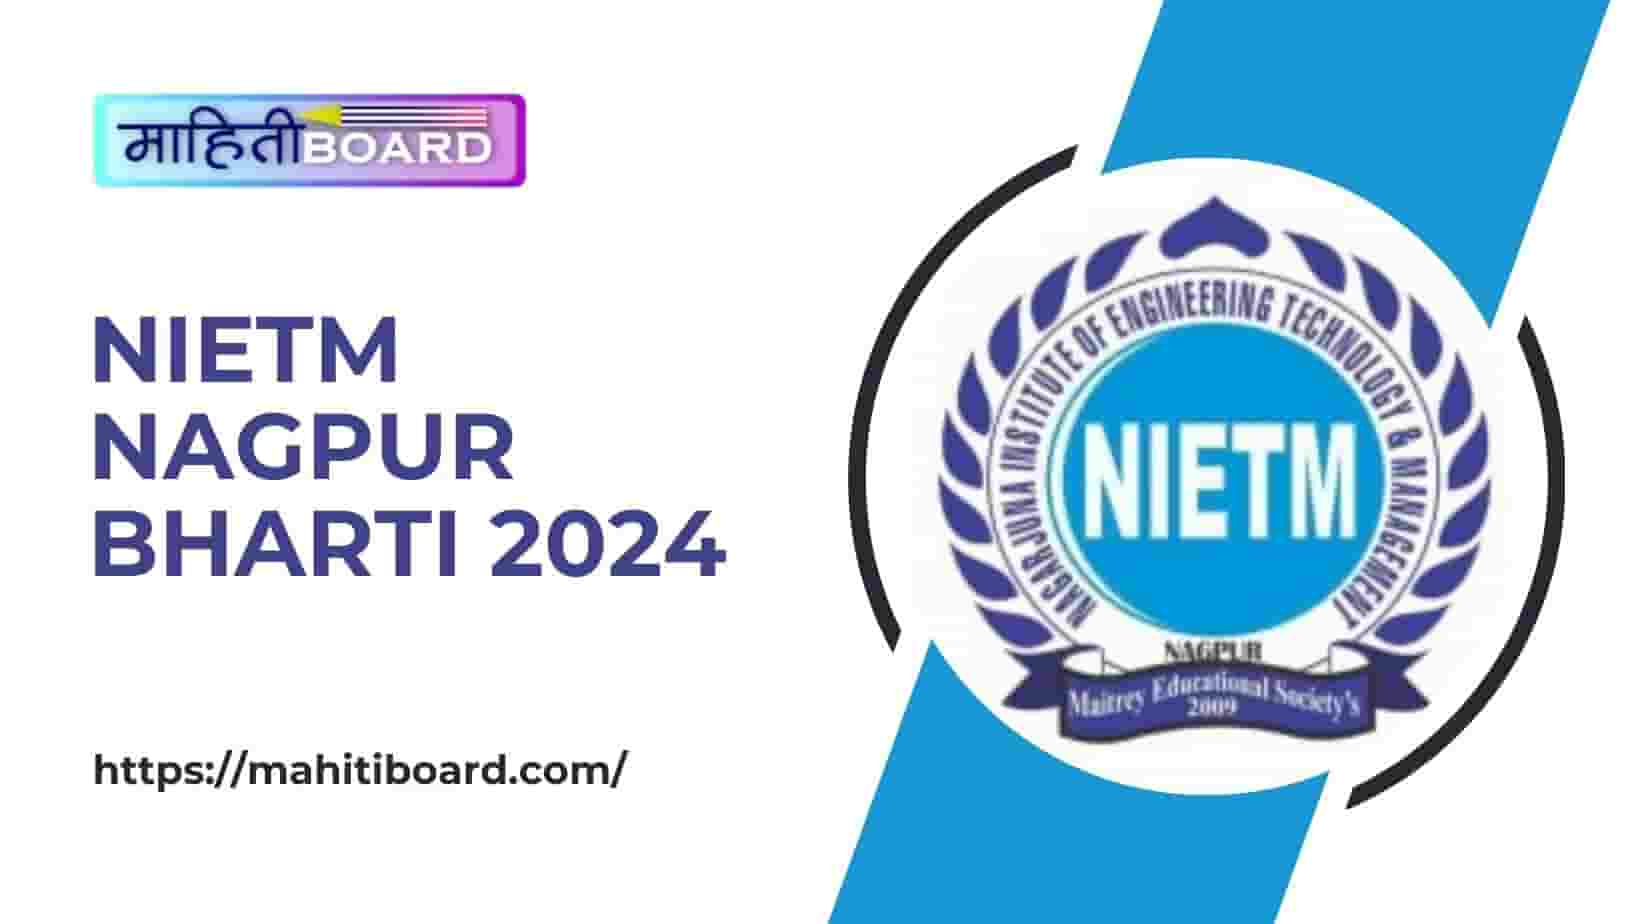 NIETM Nagpur Bharti 2024